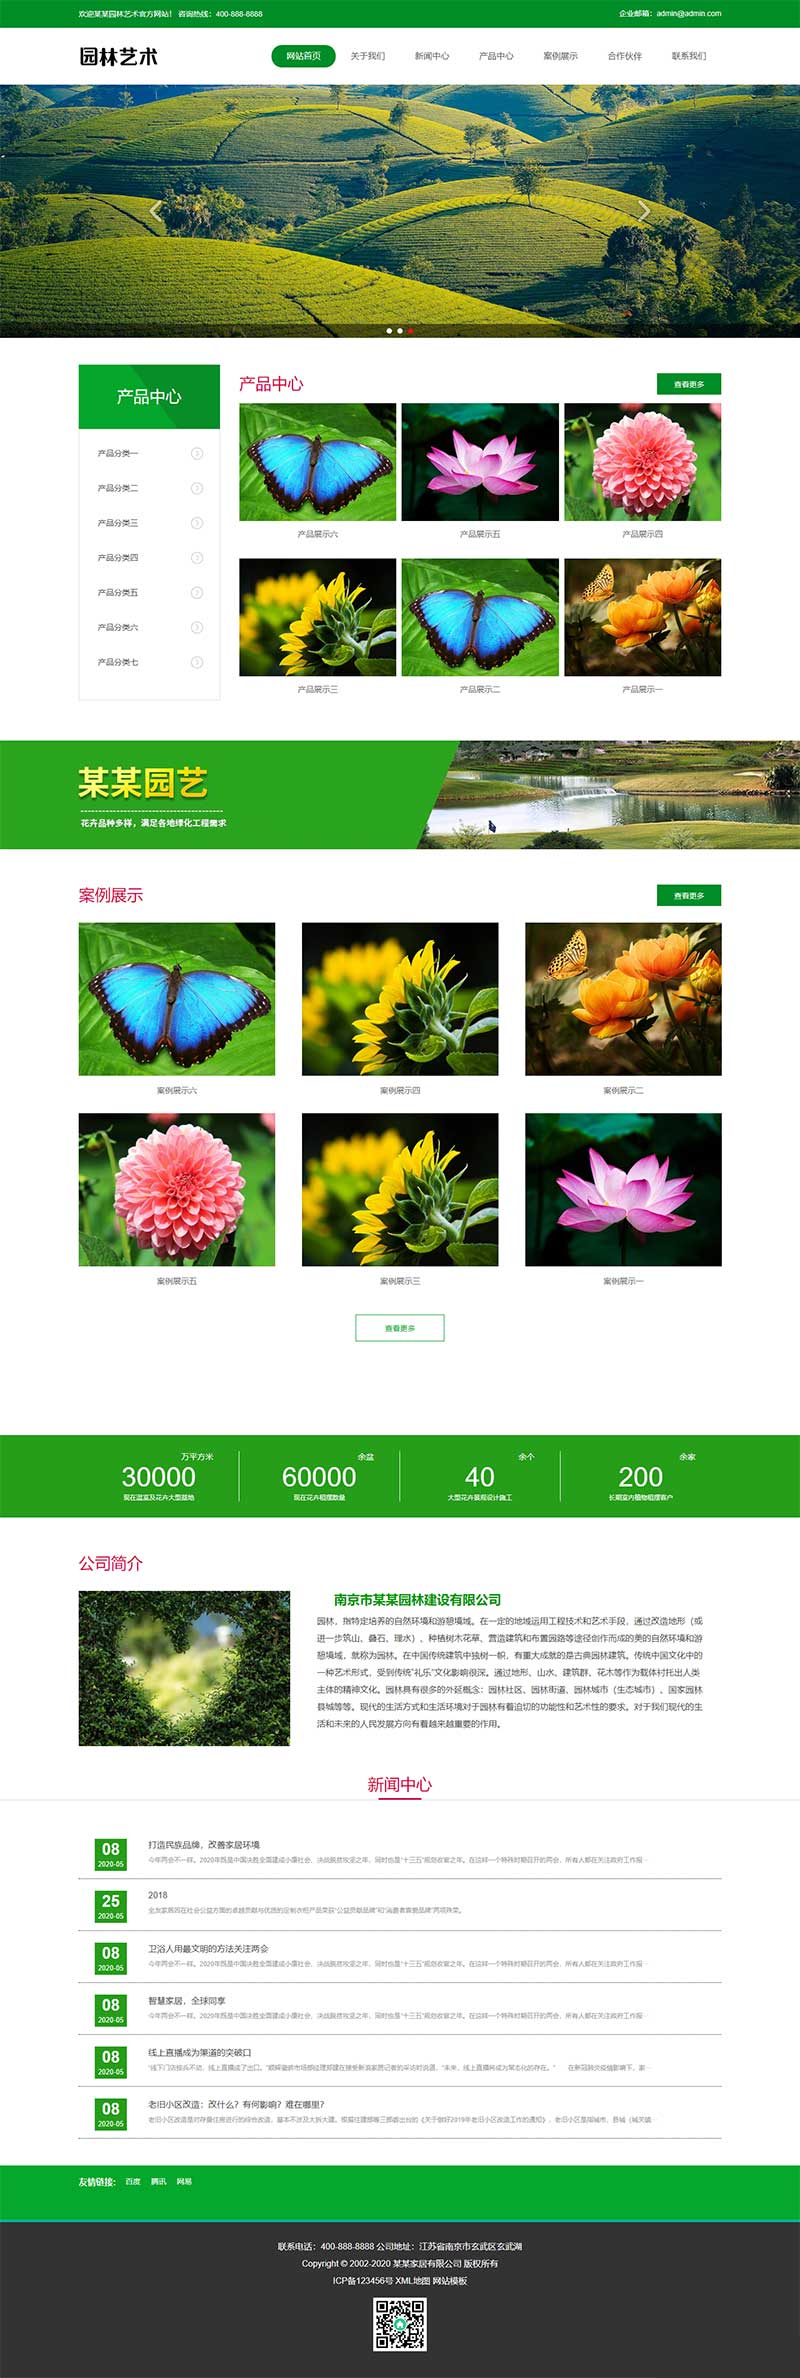 WordPress绿色园林建筑艺术花卉园艺网站模板演示图